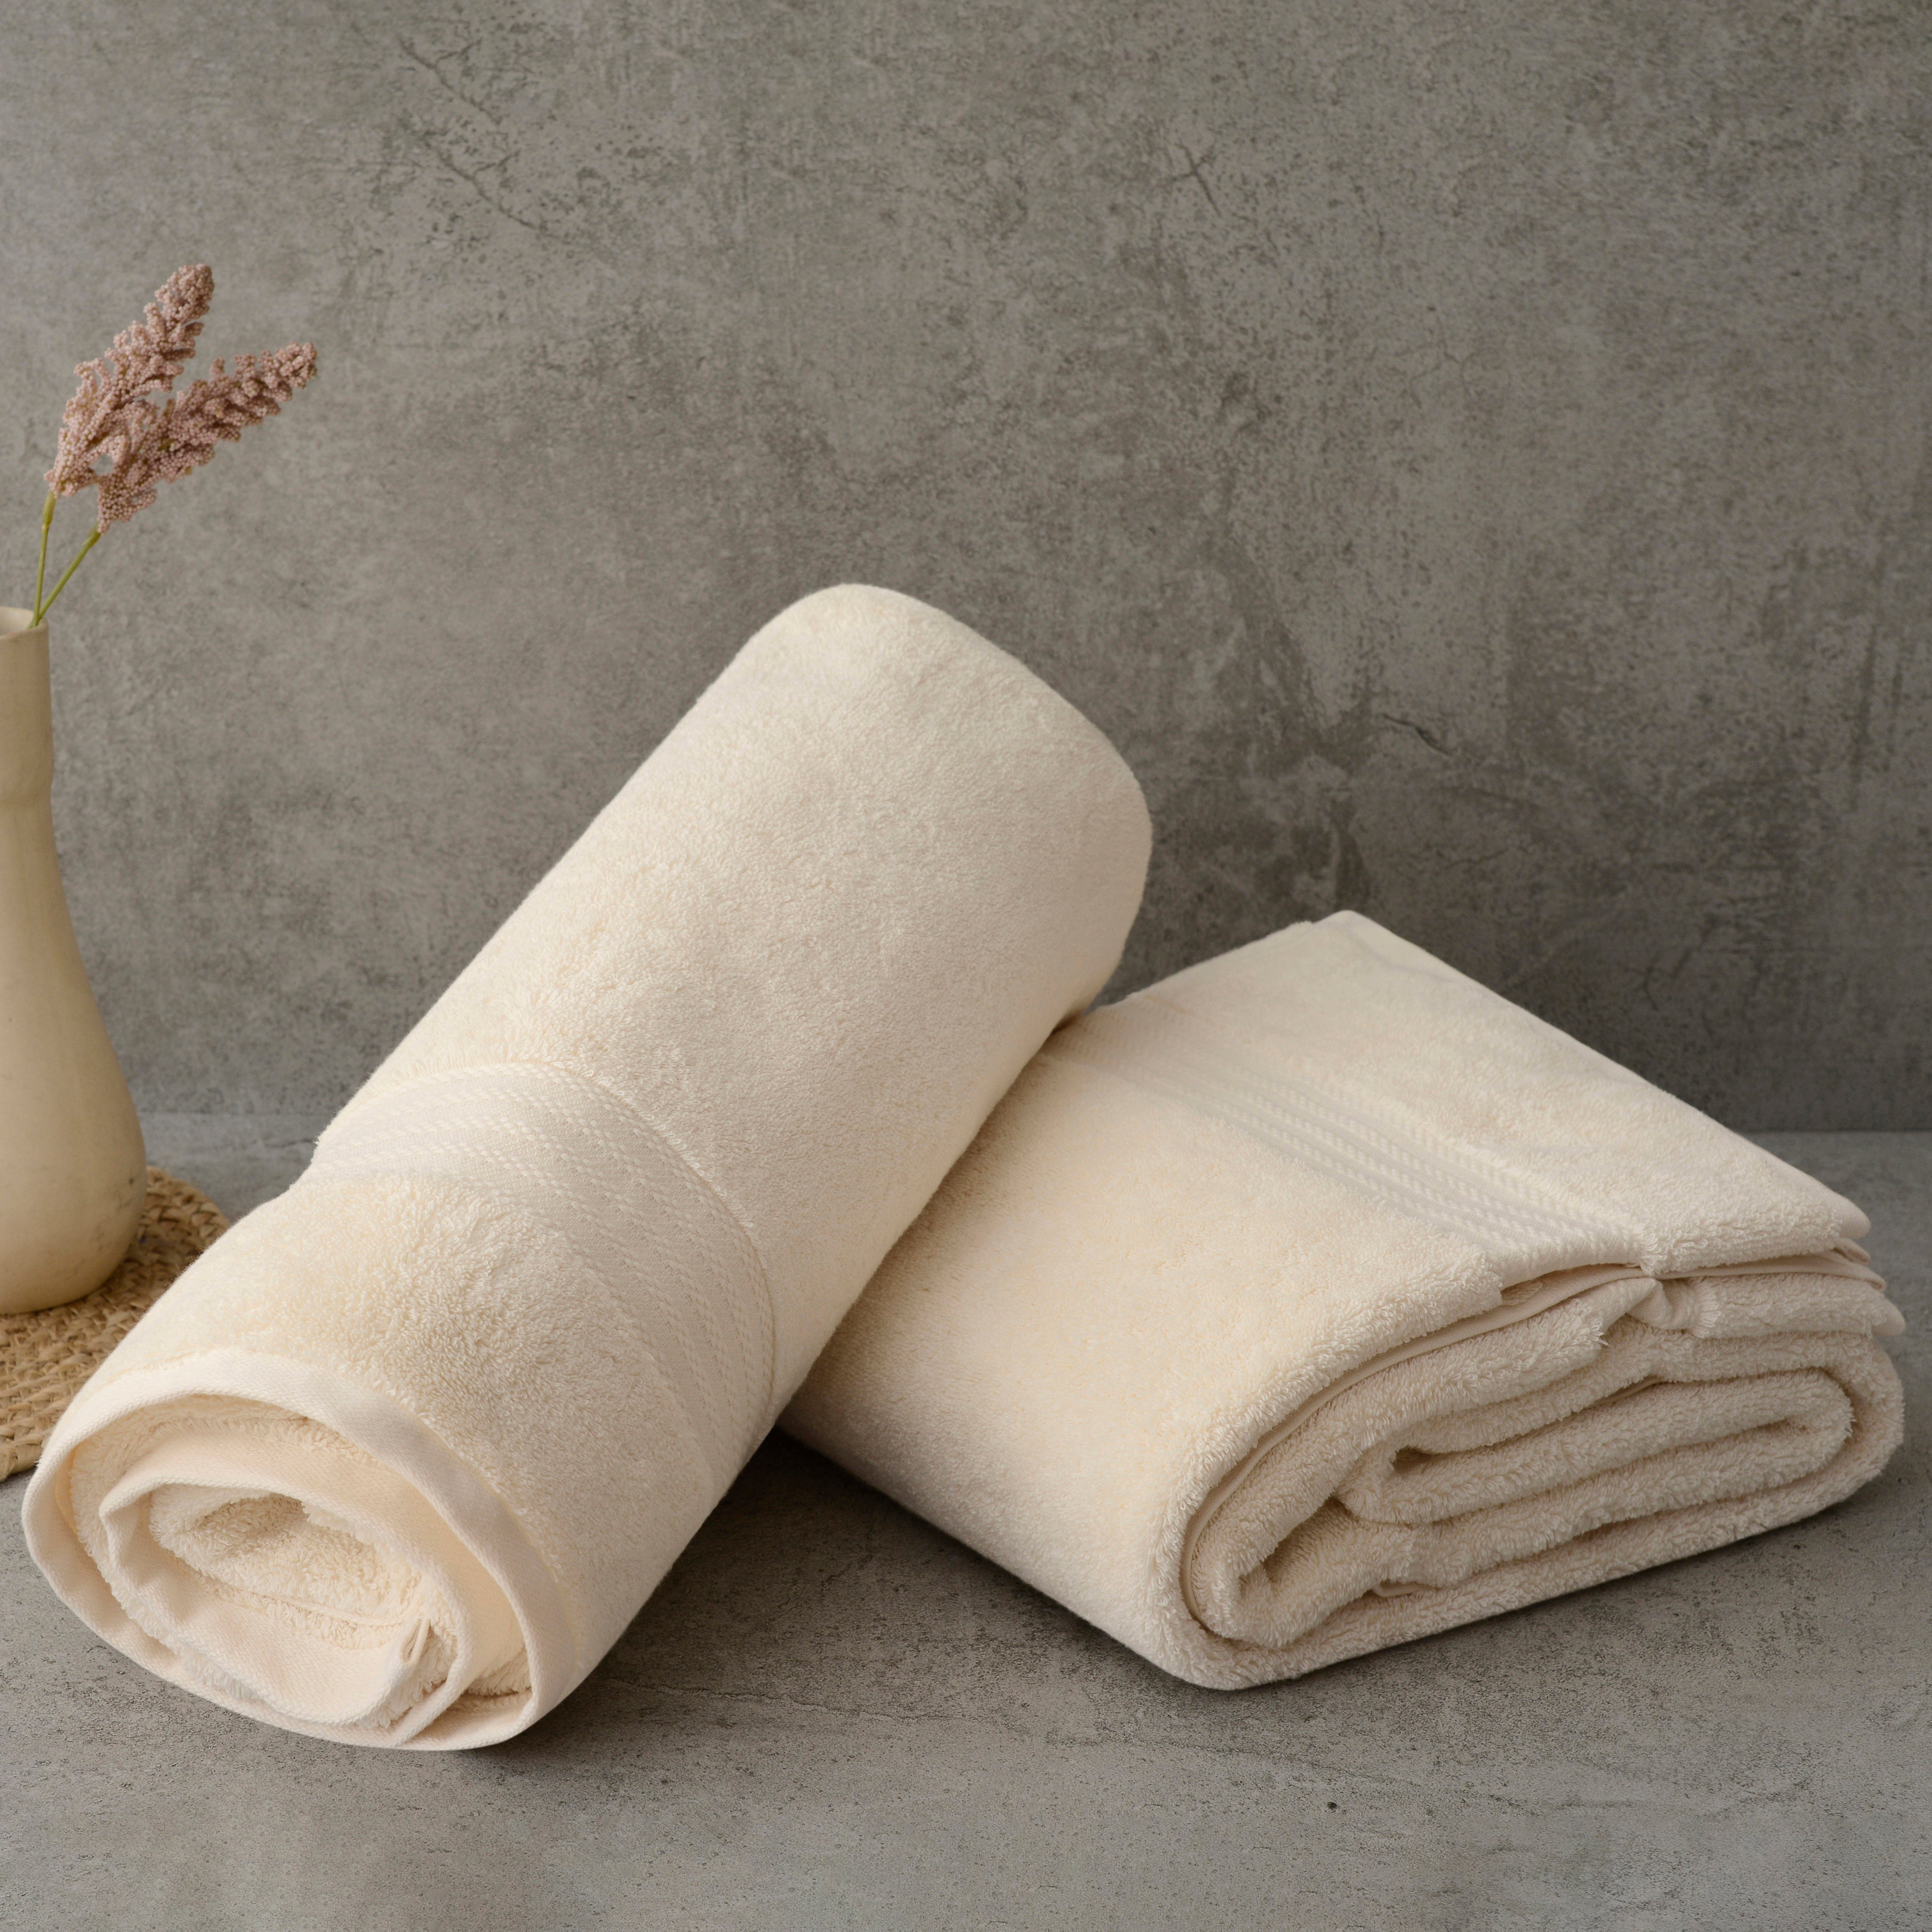 Super Soft Luxury Bath Sheets - 1 Bath Sheet Ivory 100% Cotton